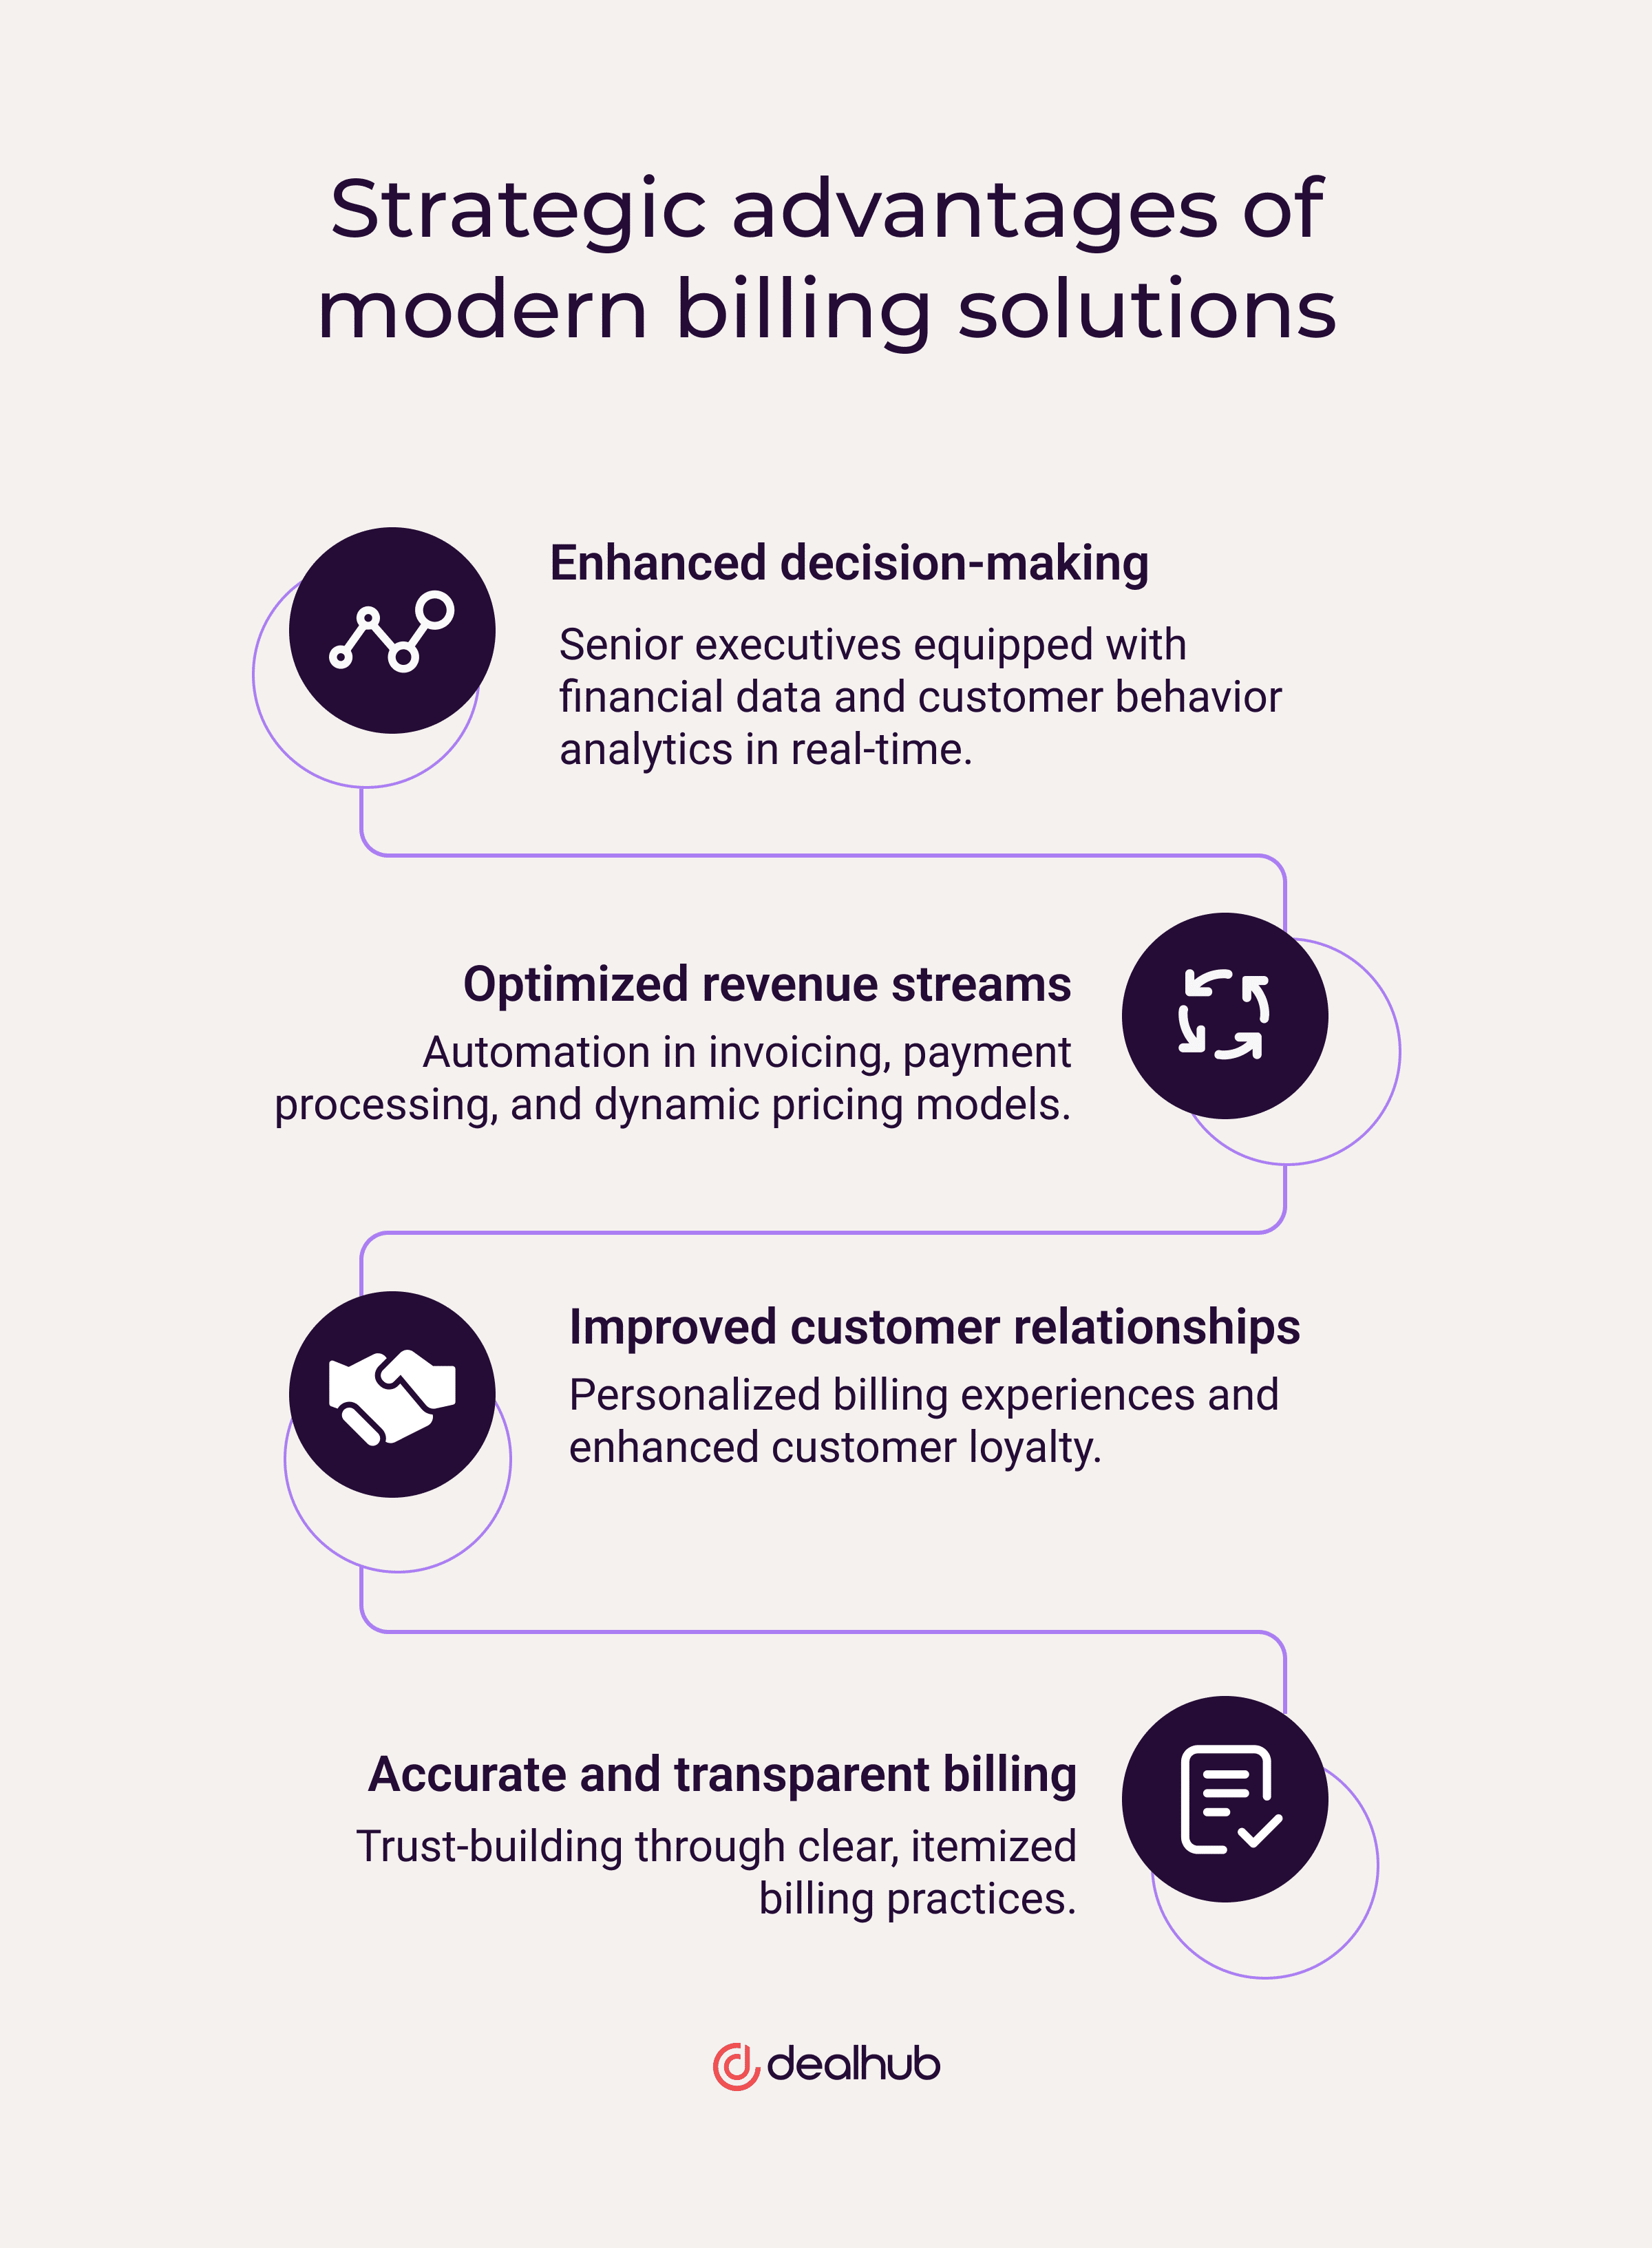 Strategic advantages of modern billing solutions